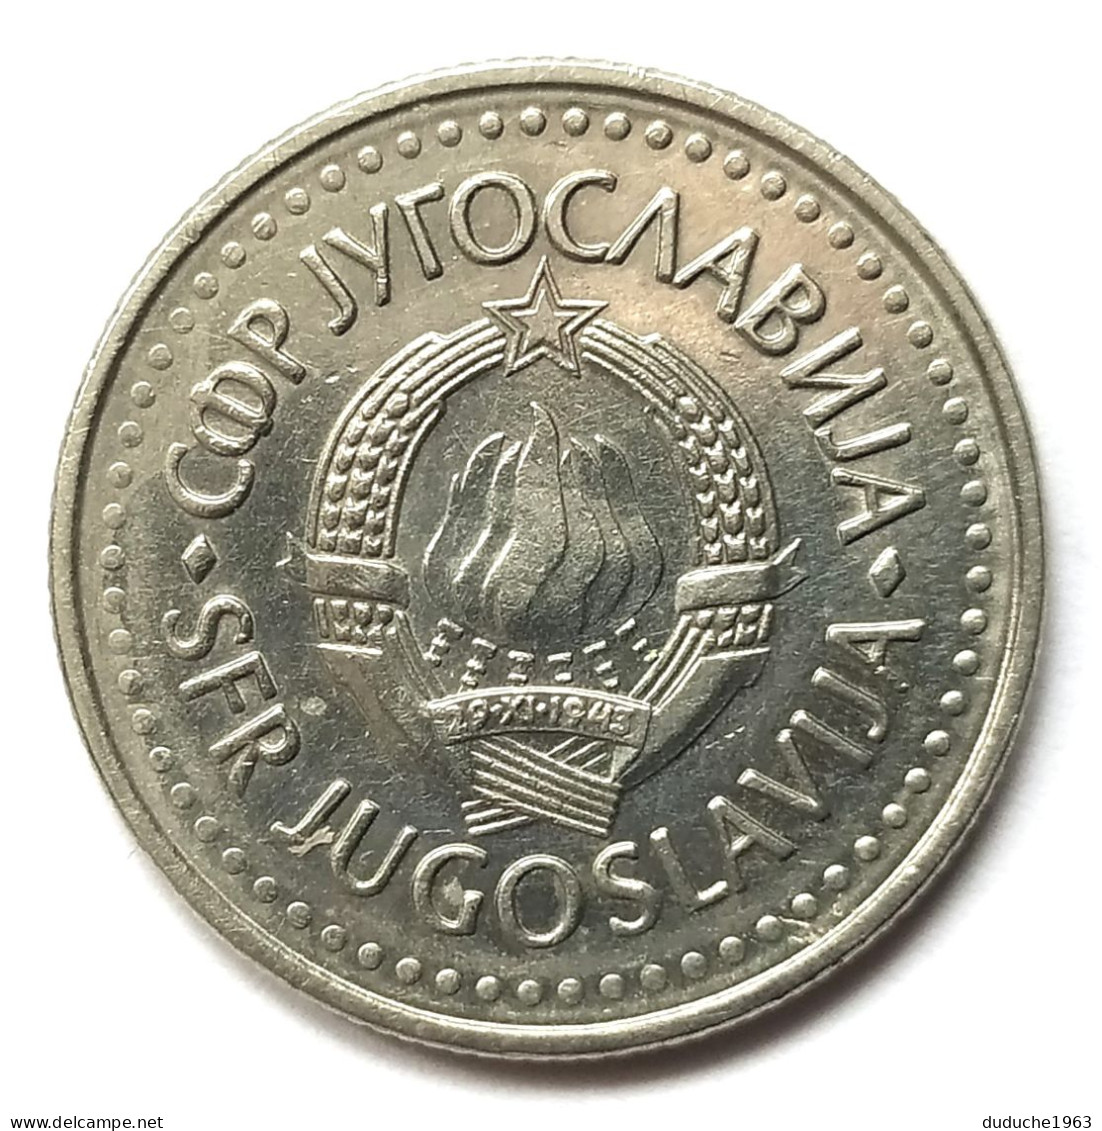 Yougoslavie - 10 Dinar 1985 - Jugoslawien